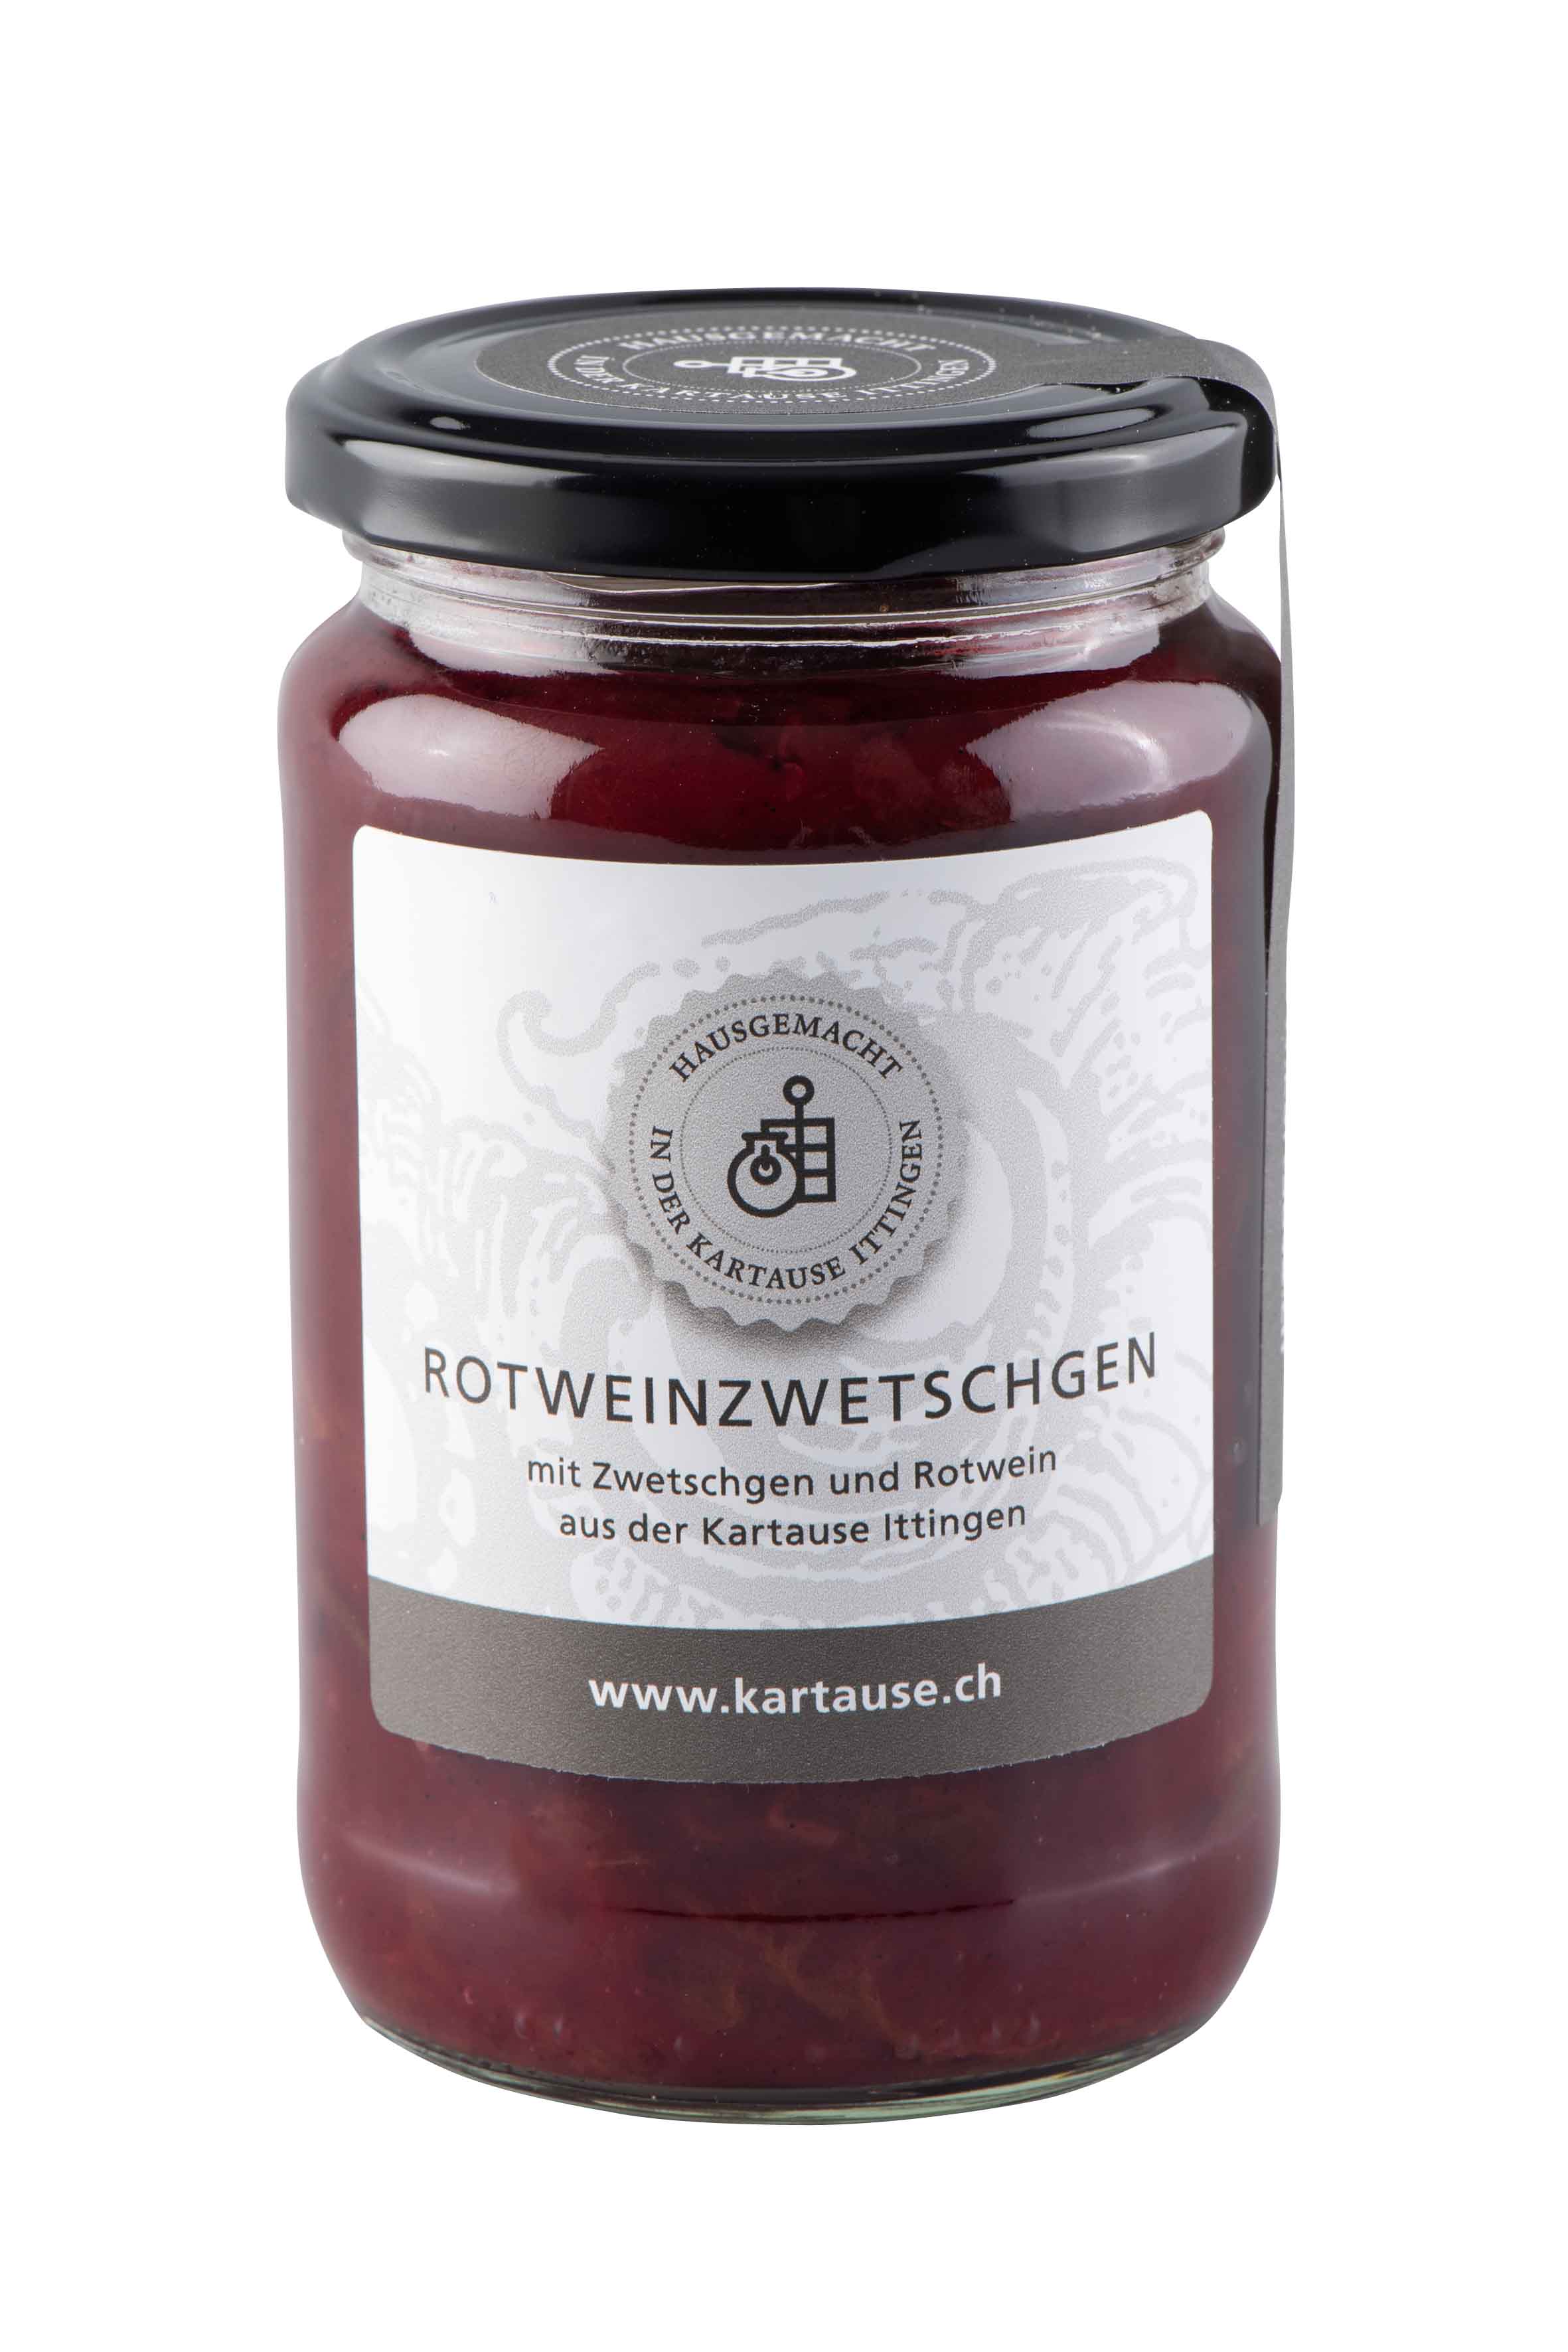 Rotweinzwetschgen – shop.kartause.ch